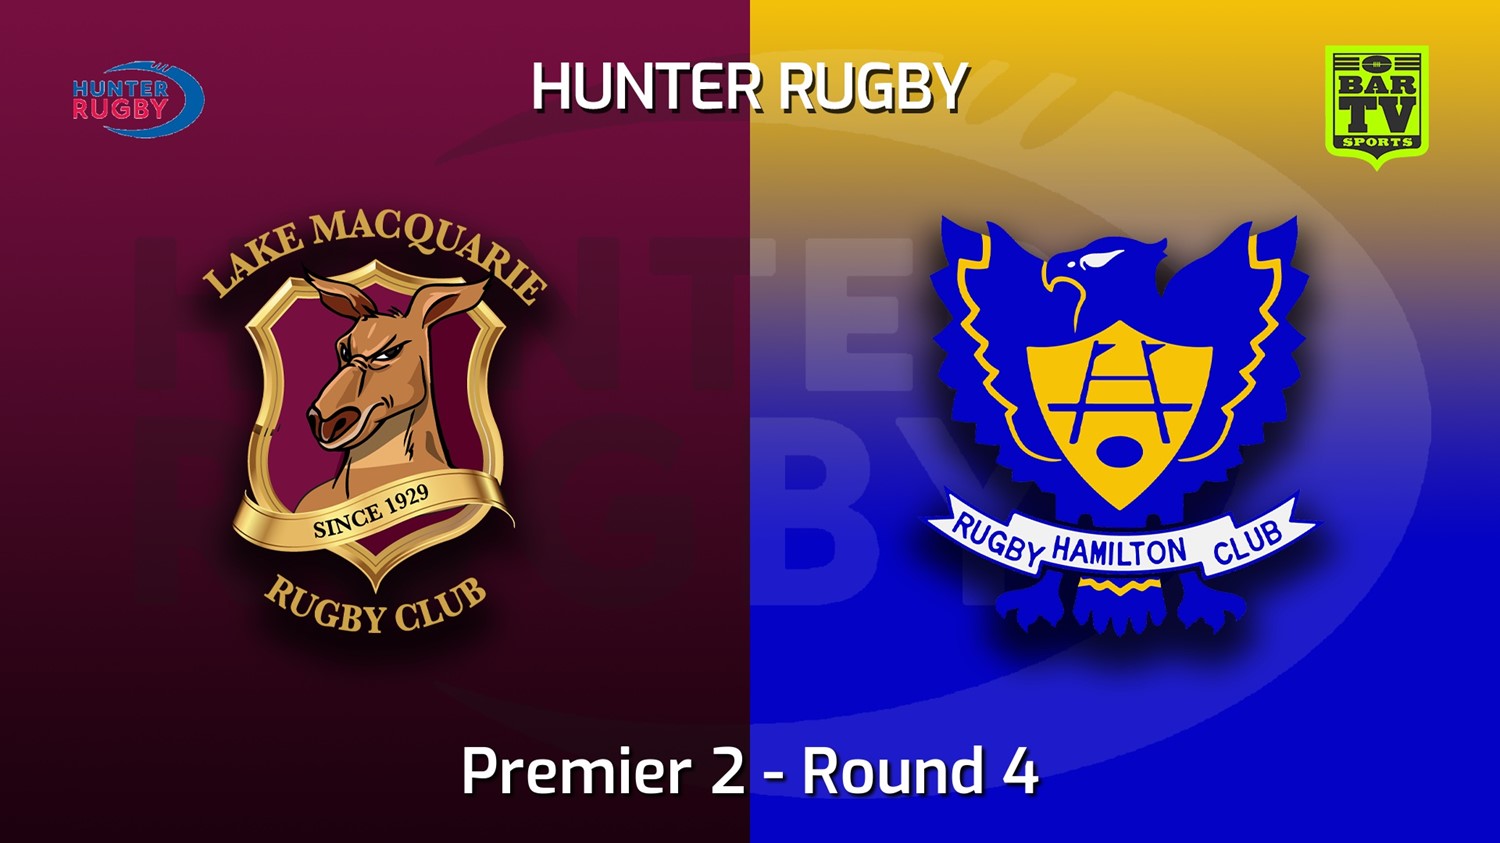 220606-Hunter Rugby Round 4 - Premier 2 - Lake Macquarie v Hamilton Hawks Slate Image